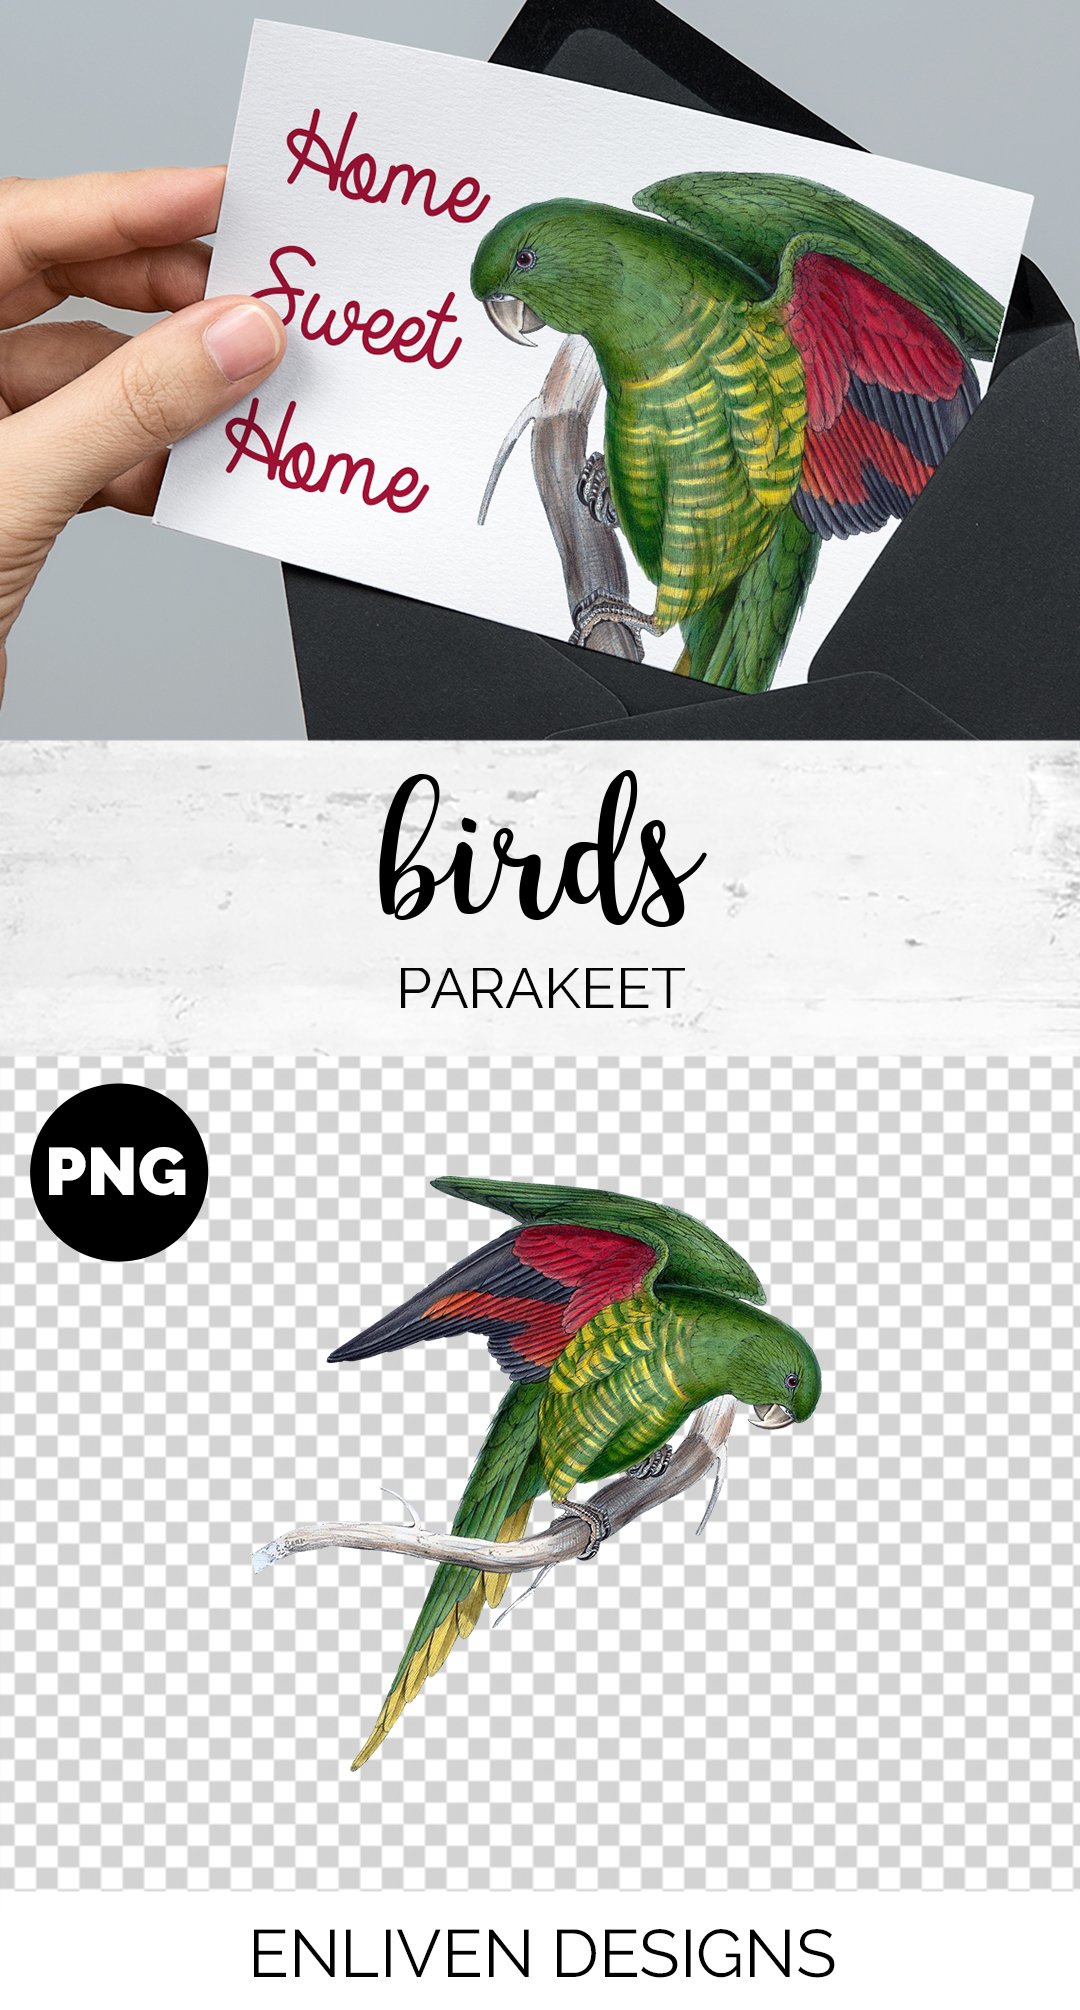 Parrot Parakeet Parrot preview image.